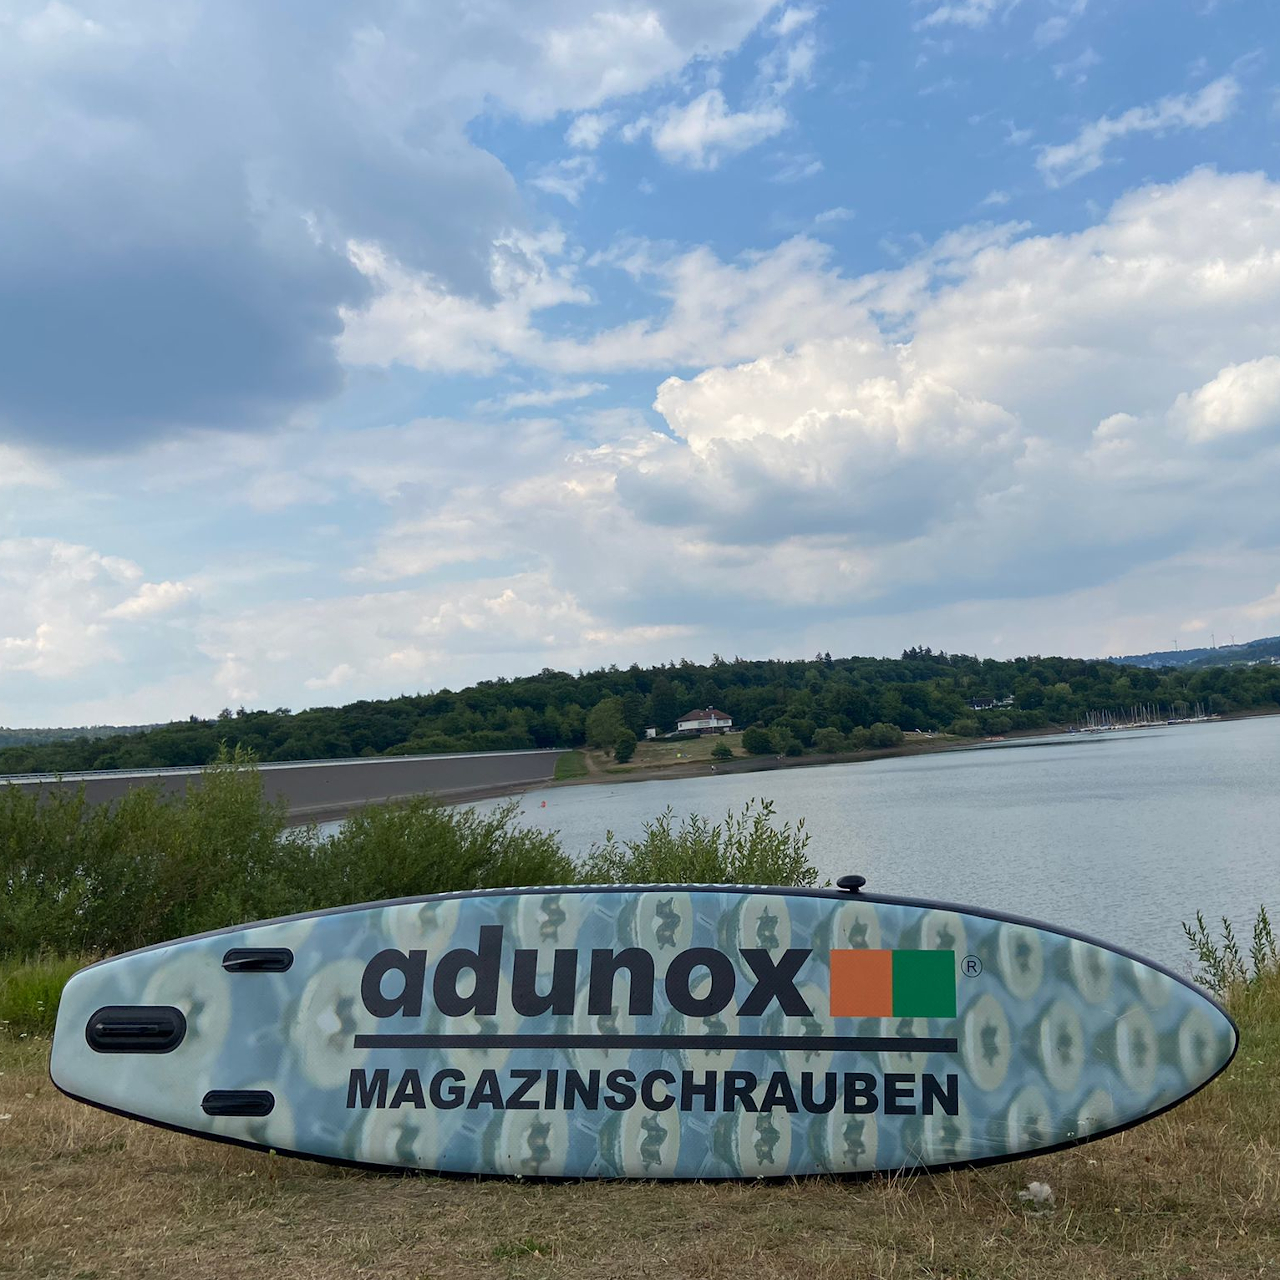 adunox® Stand Up Paddleboard